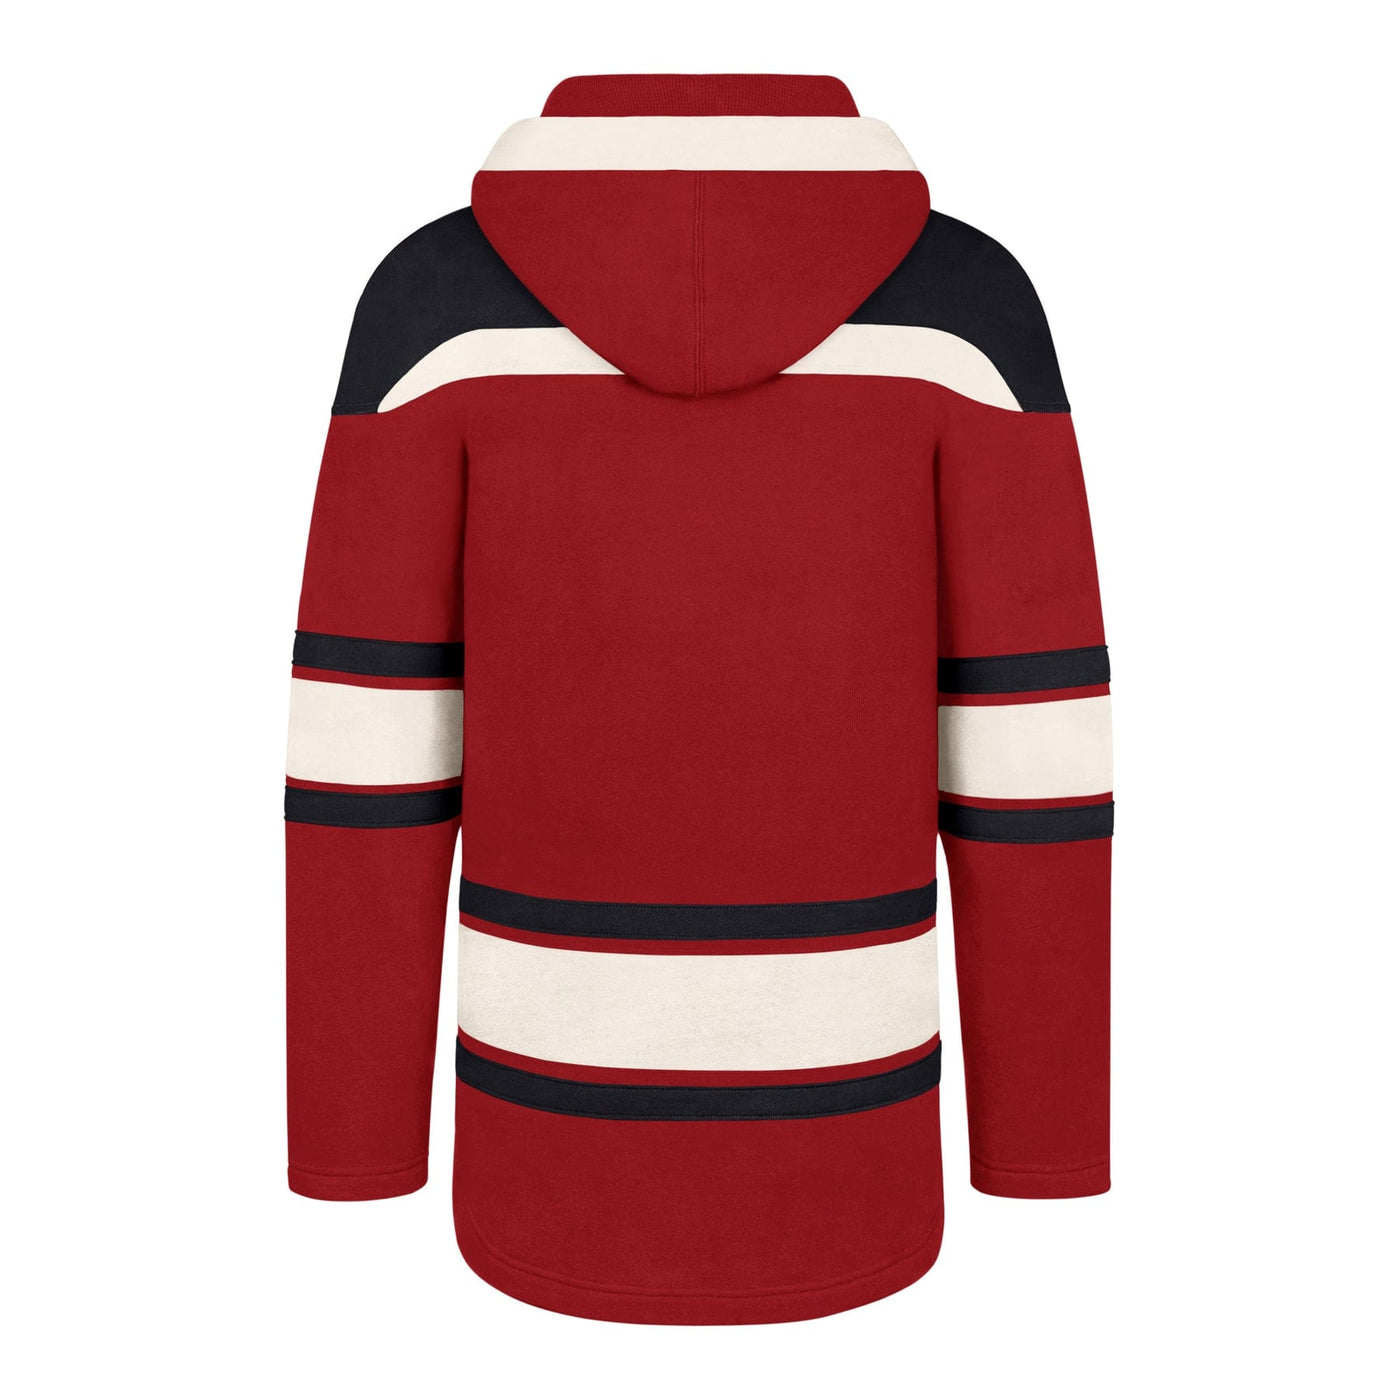 47 Brand NHL Lacer Fleece Mens Hoody - Montreal Canadiens - TheHockeyShop.com